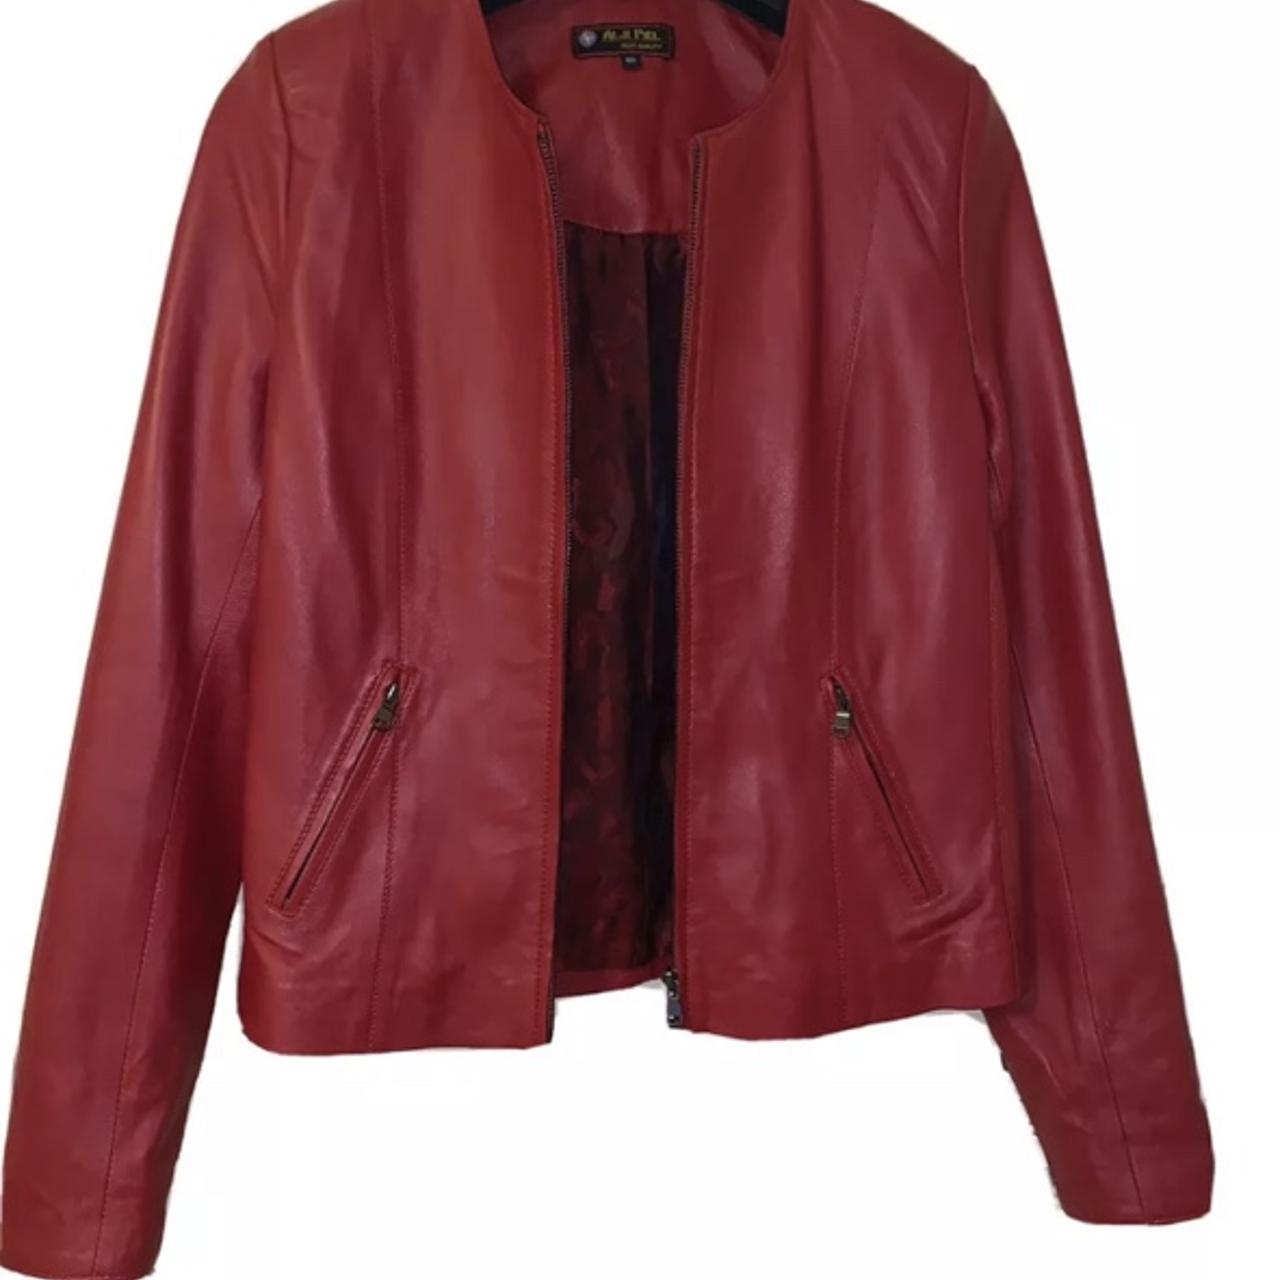 authentic leather jacket from Alji Piel. Size 40... - Depop